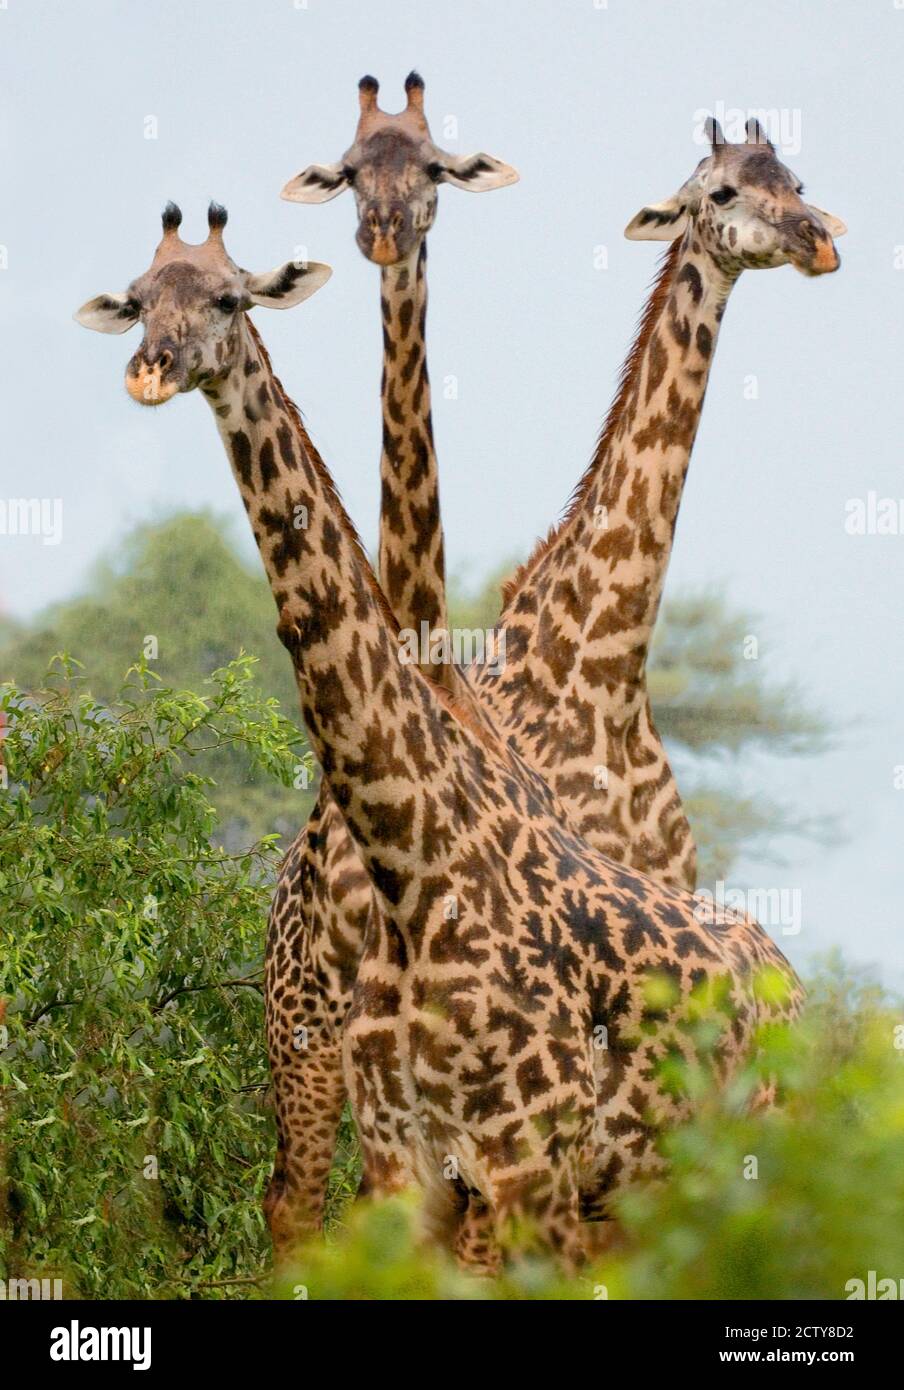 Trois girafes Masai debout dans une forêt, lac Manyara, parc national du lac Manyara, Tanzanie (Giraffa camolopaardalis tippelskirchi) Banque D'Images